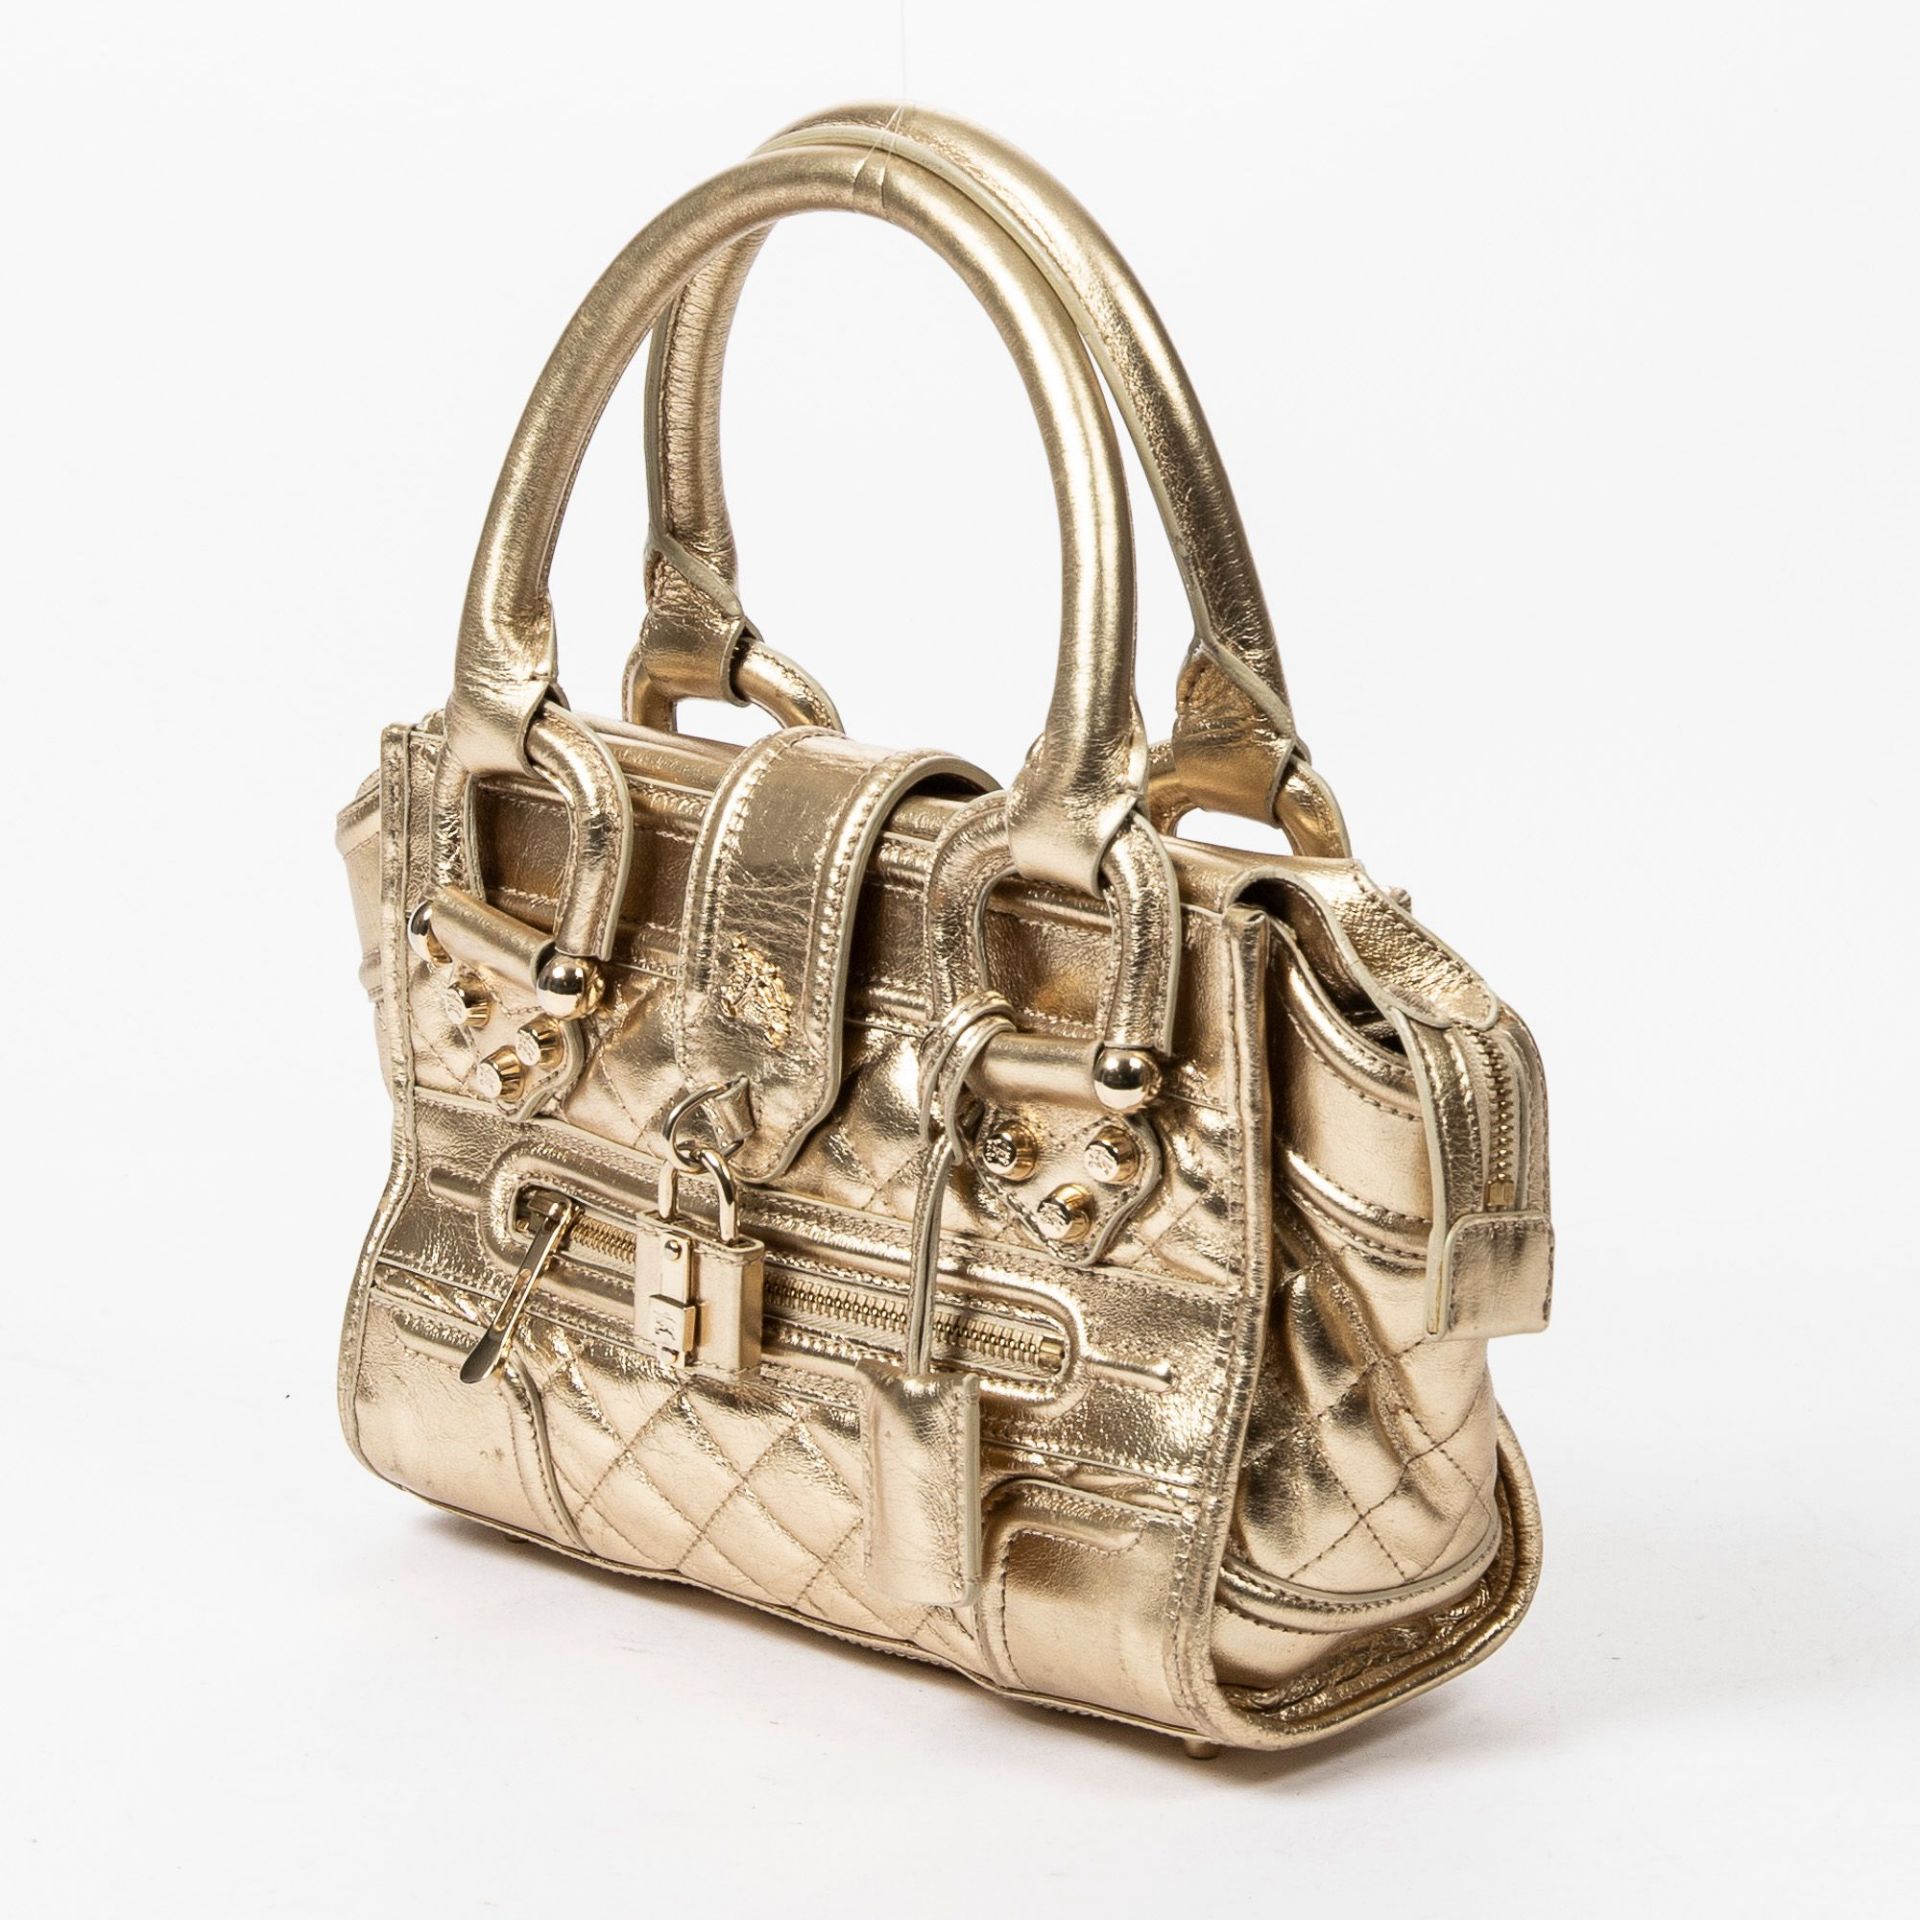 RRP £890 Burberry Prorsum Knight Medium Shoulder Bag in Metallic Gold - AAP4585 - Grade A Please - Image 2 of 3